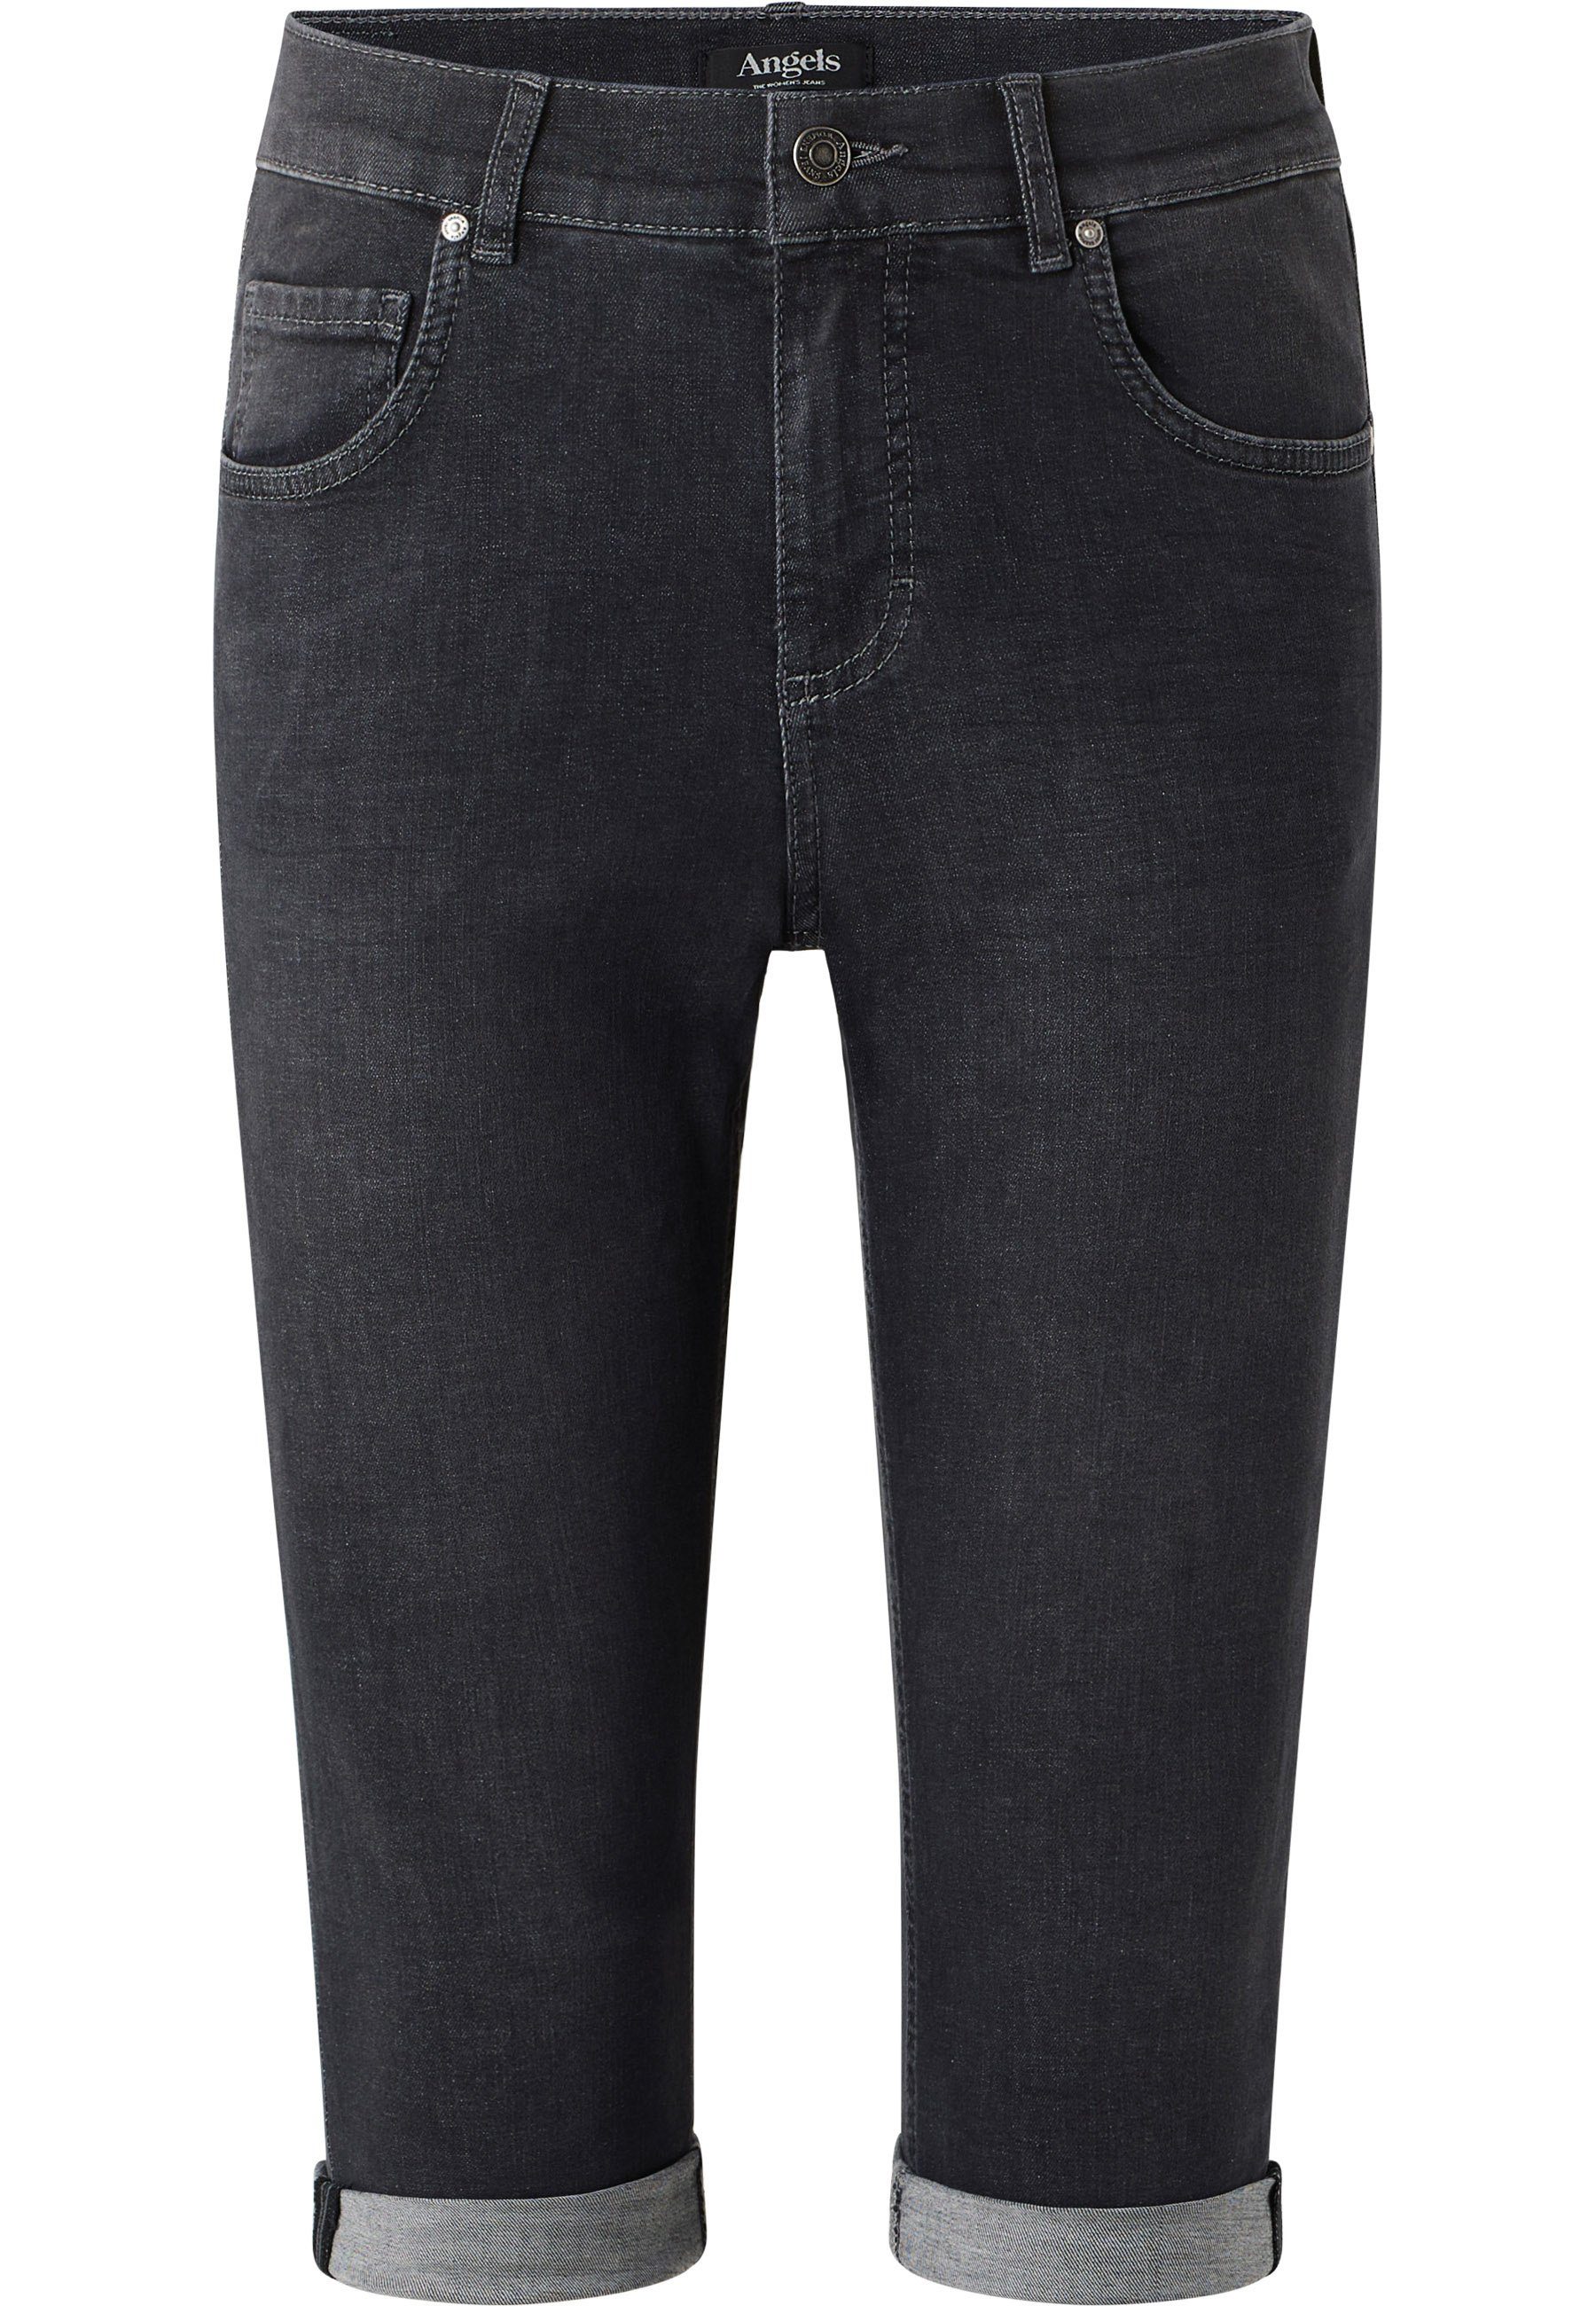 ANGELS 5-Pocket-Jeans Jeans anthrazit Capri Label-Applikationen mit Used-Look mit TU